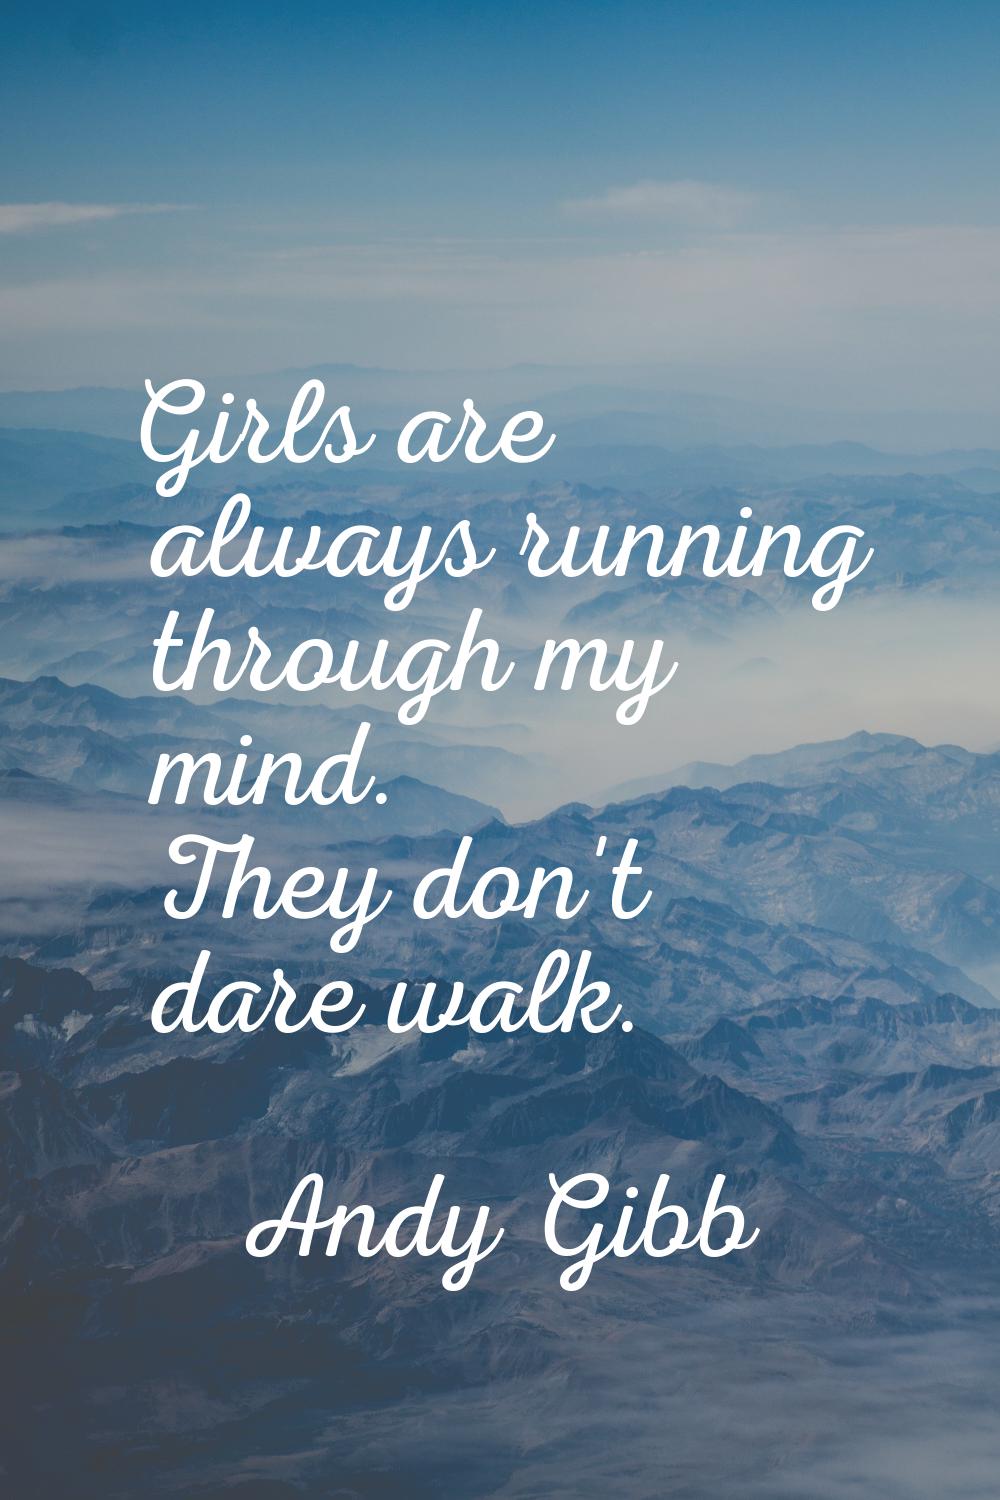 Girls are always running through my mind. They don't dare walk.